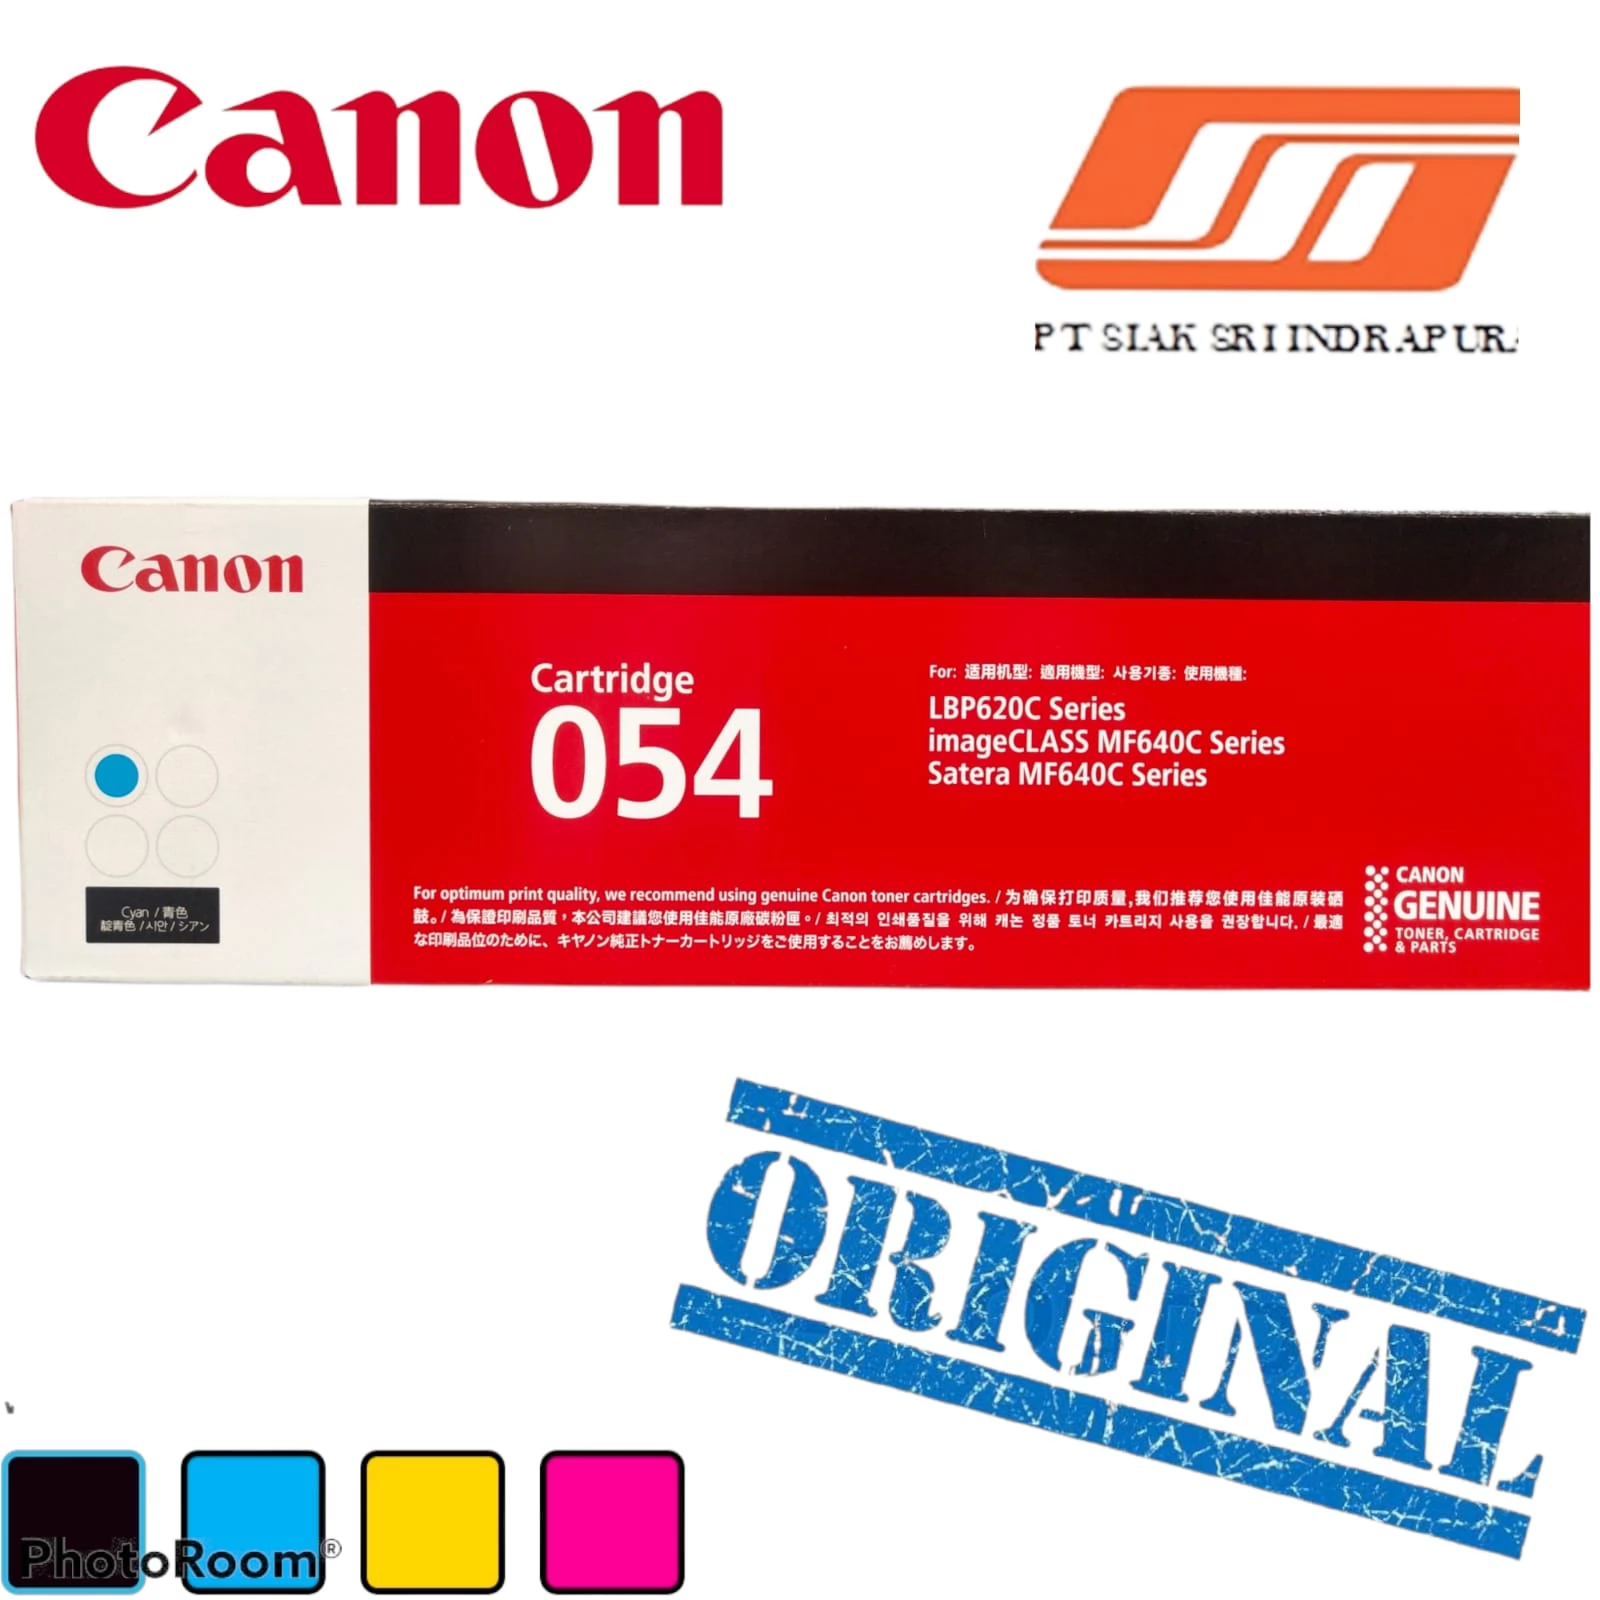 Canon Cartridge 054 Black Toner - Standard Capacity